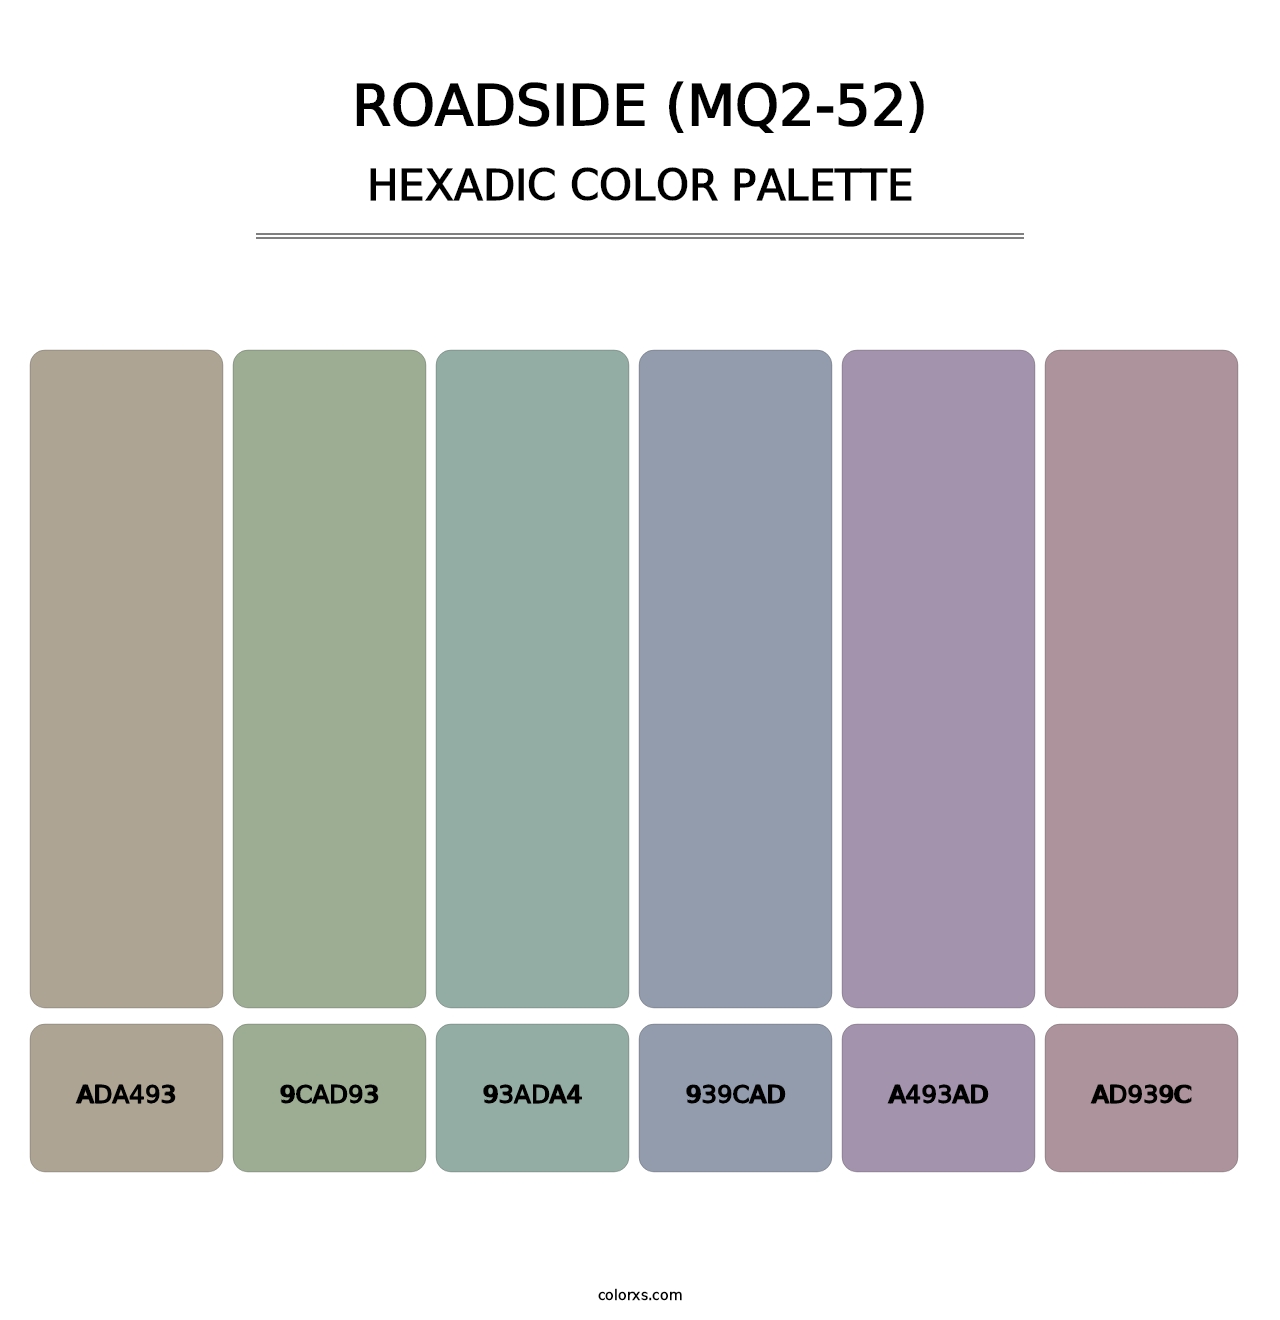 Roadside (MQ2-52) - Hexadic Color Palette